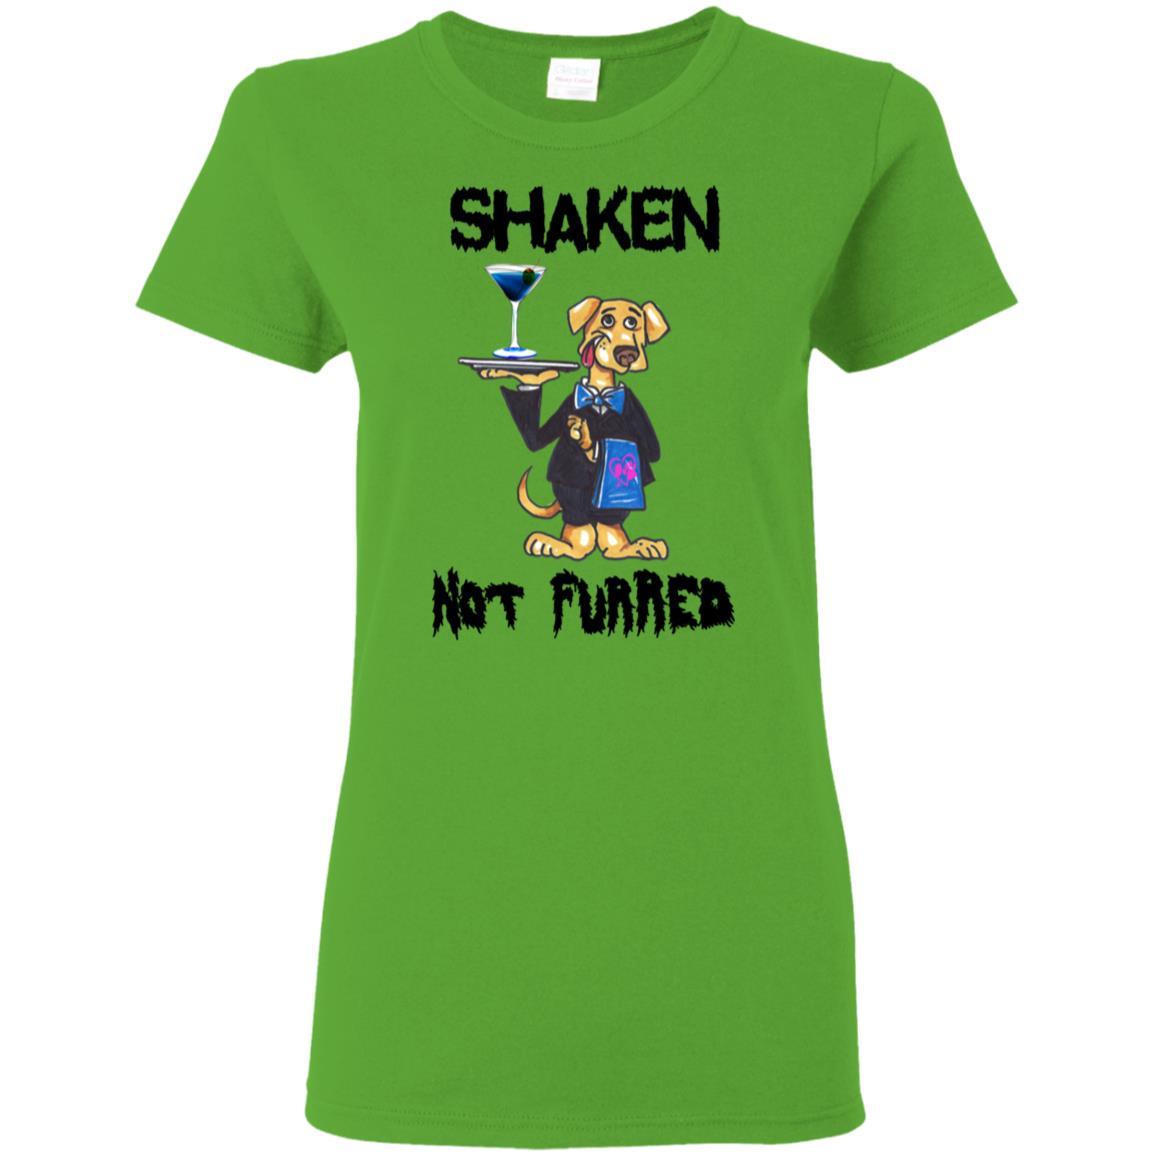 T-Shirts Electric Green / S WineyBitches.Co "Shaken Not Furred" Ladies' 5.3 oz. T-Shirt WineyBitchesCo